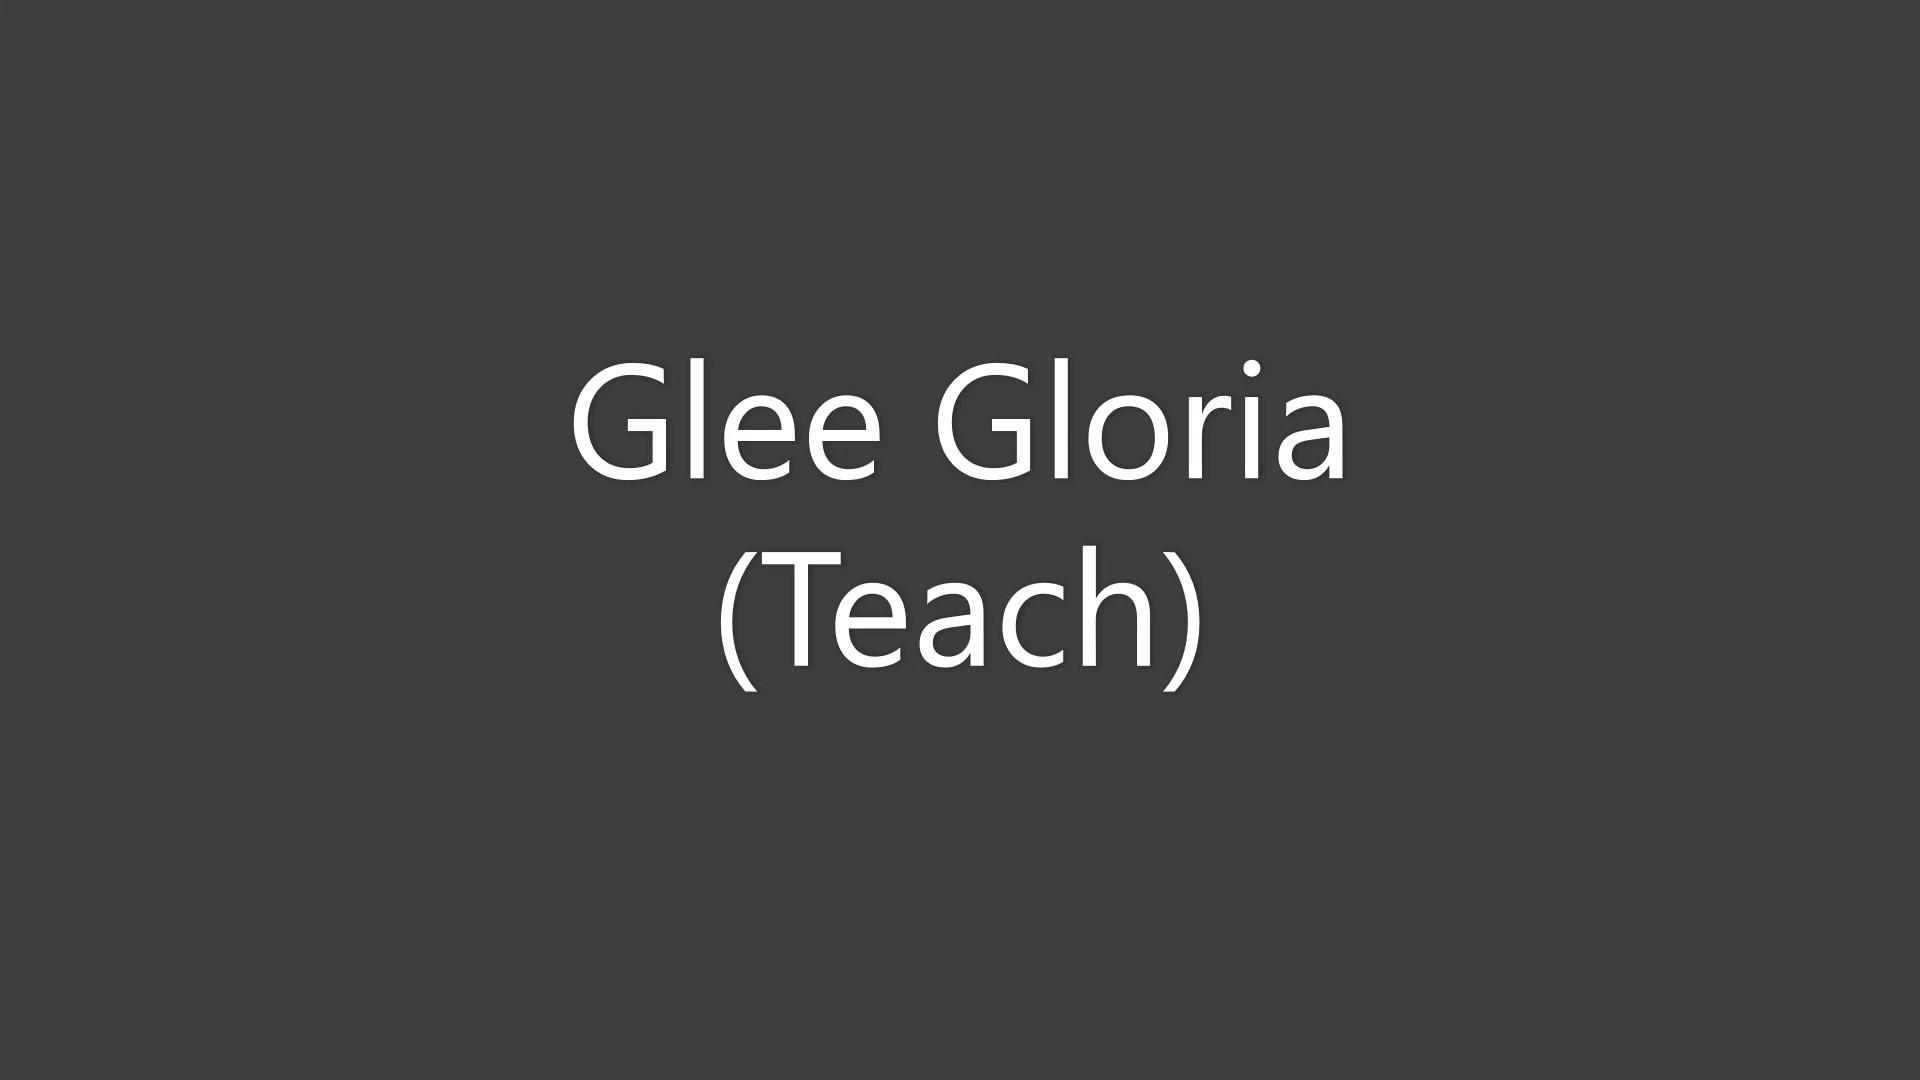 Glee Gloria Teach